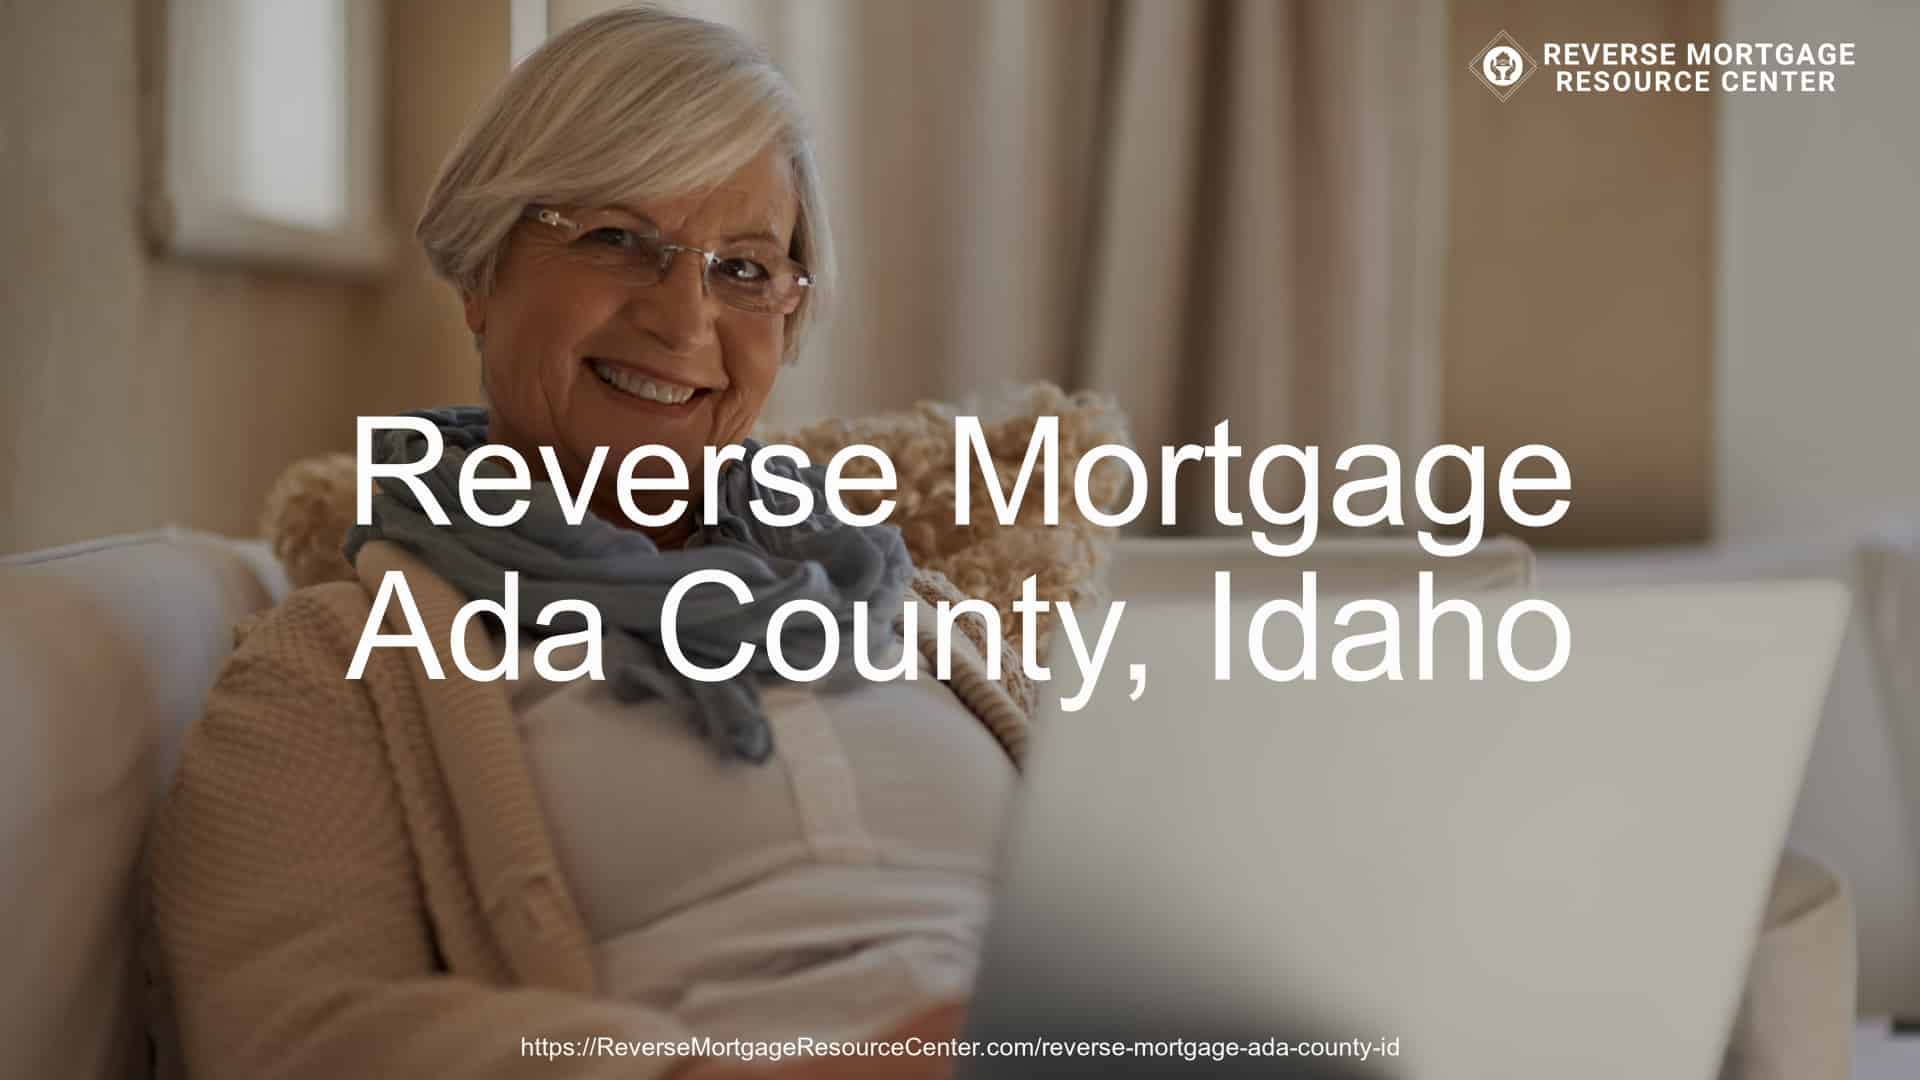 Reverse Mortgage Loans in Ada County Idaho